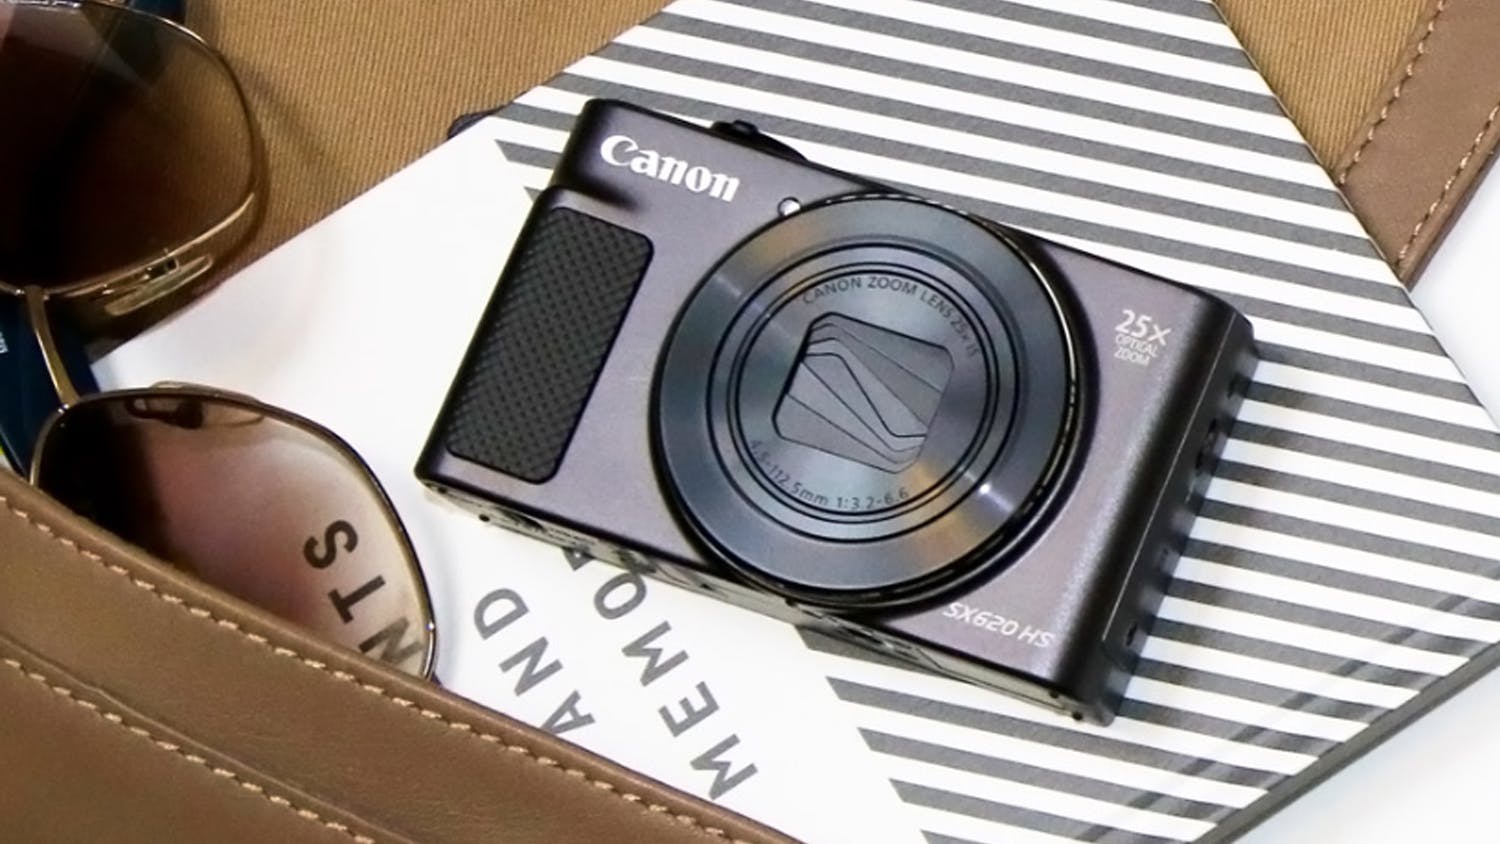 Canon PowerShot SX620 HS Super Zoom Digital Camera